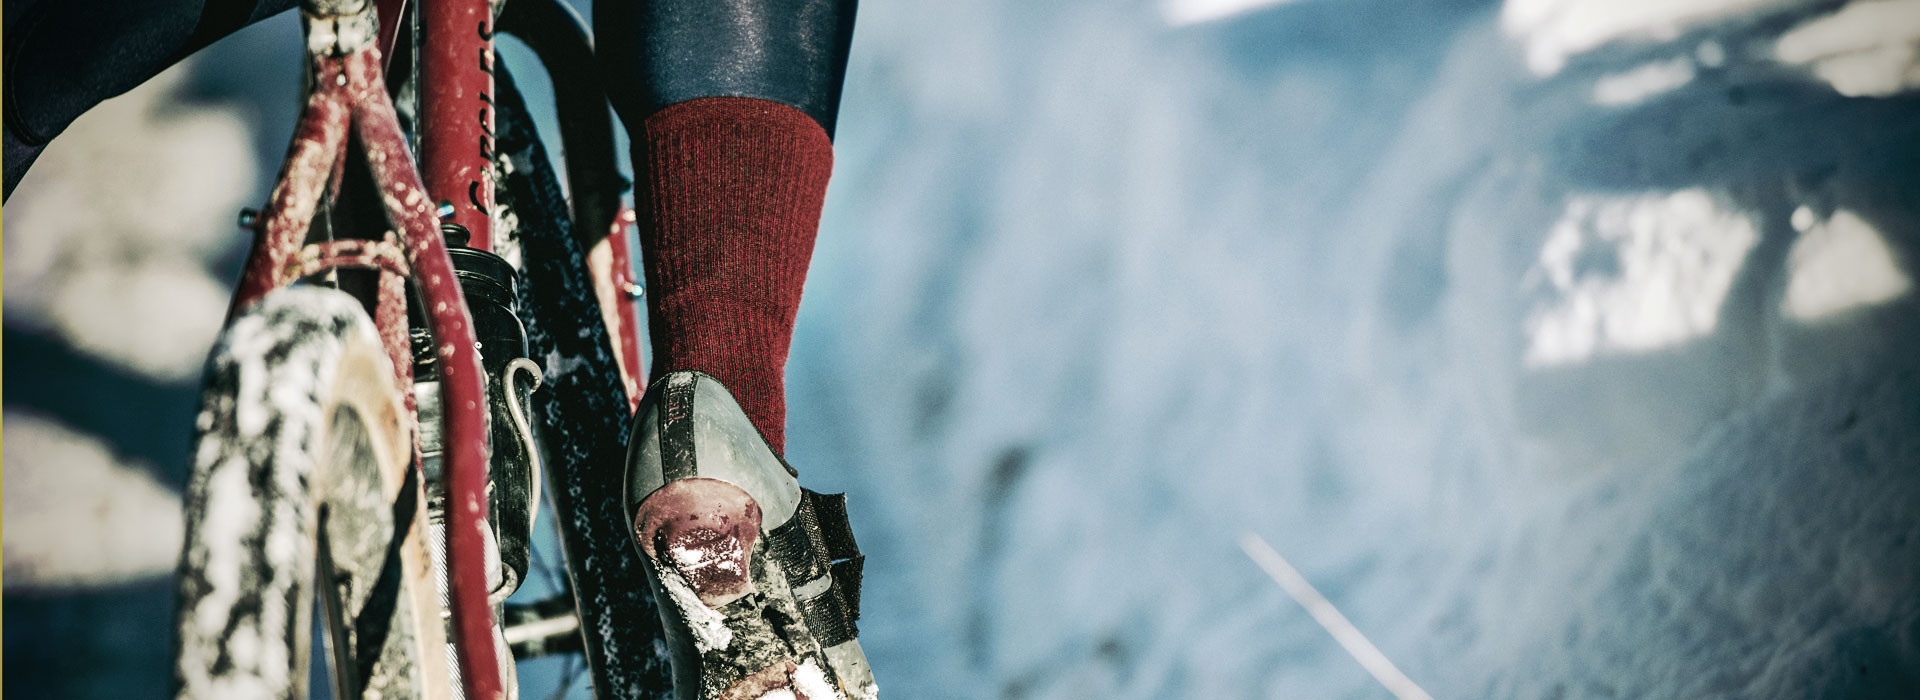 Demarchi - Winter cycling socks